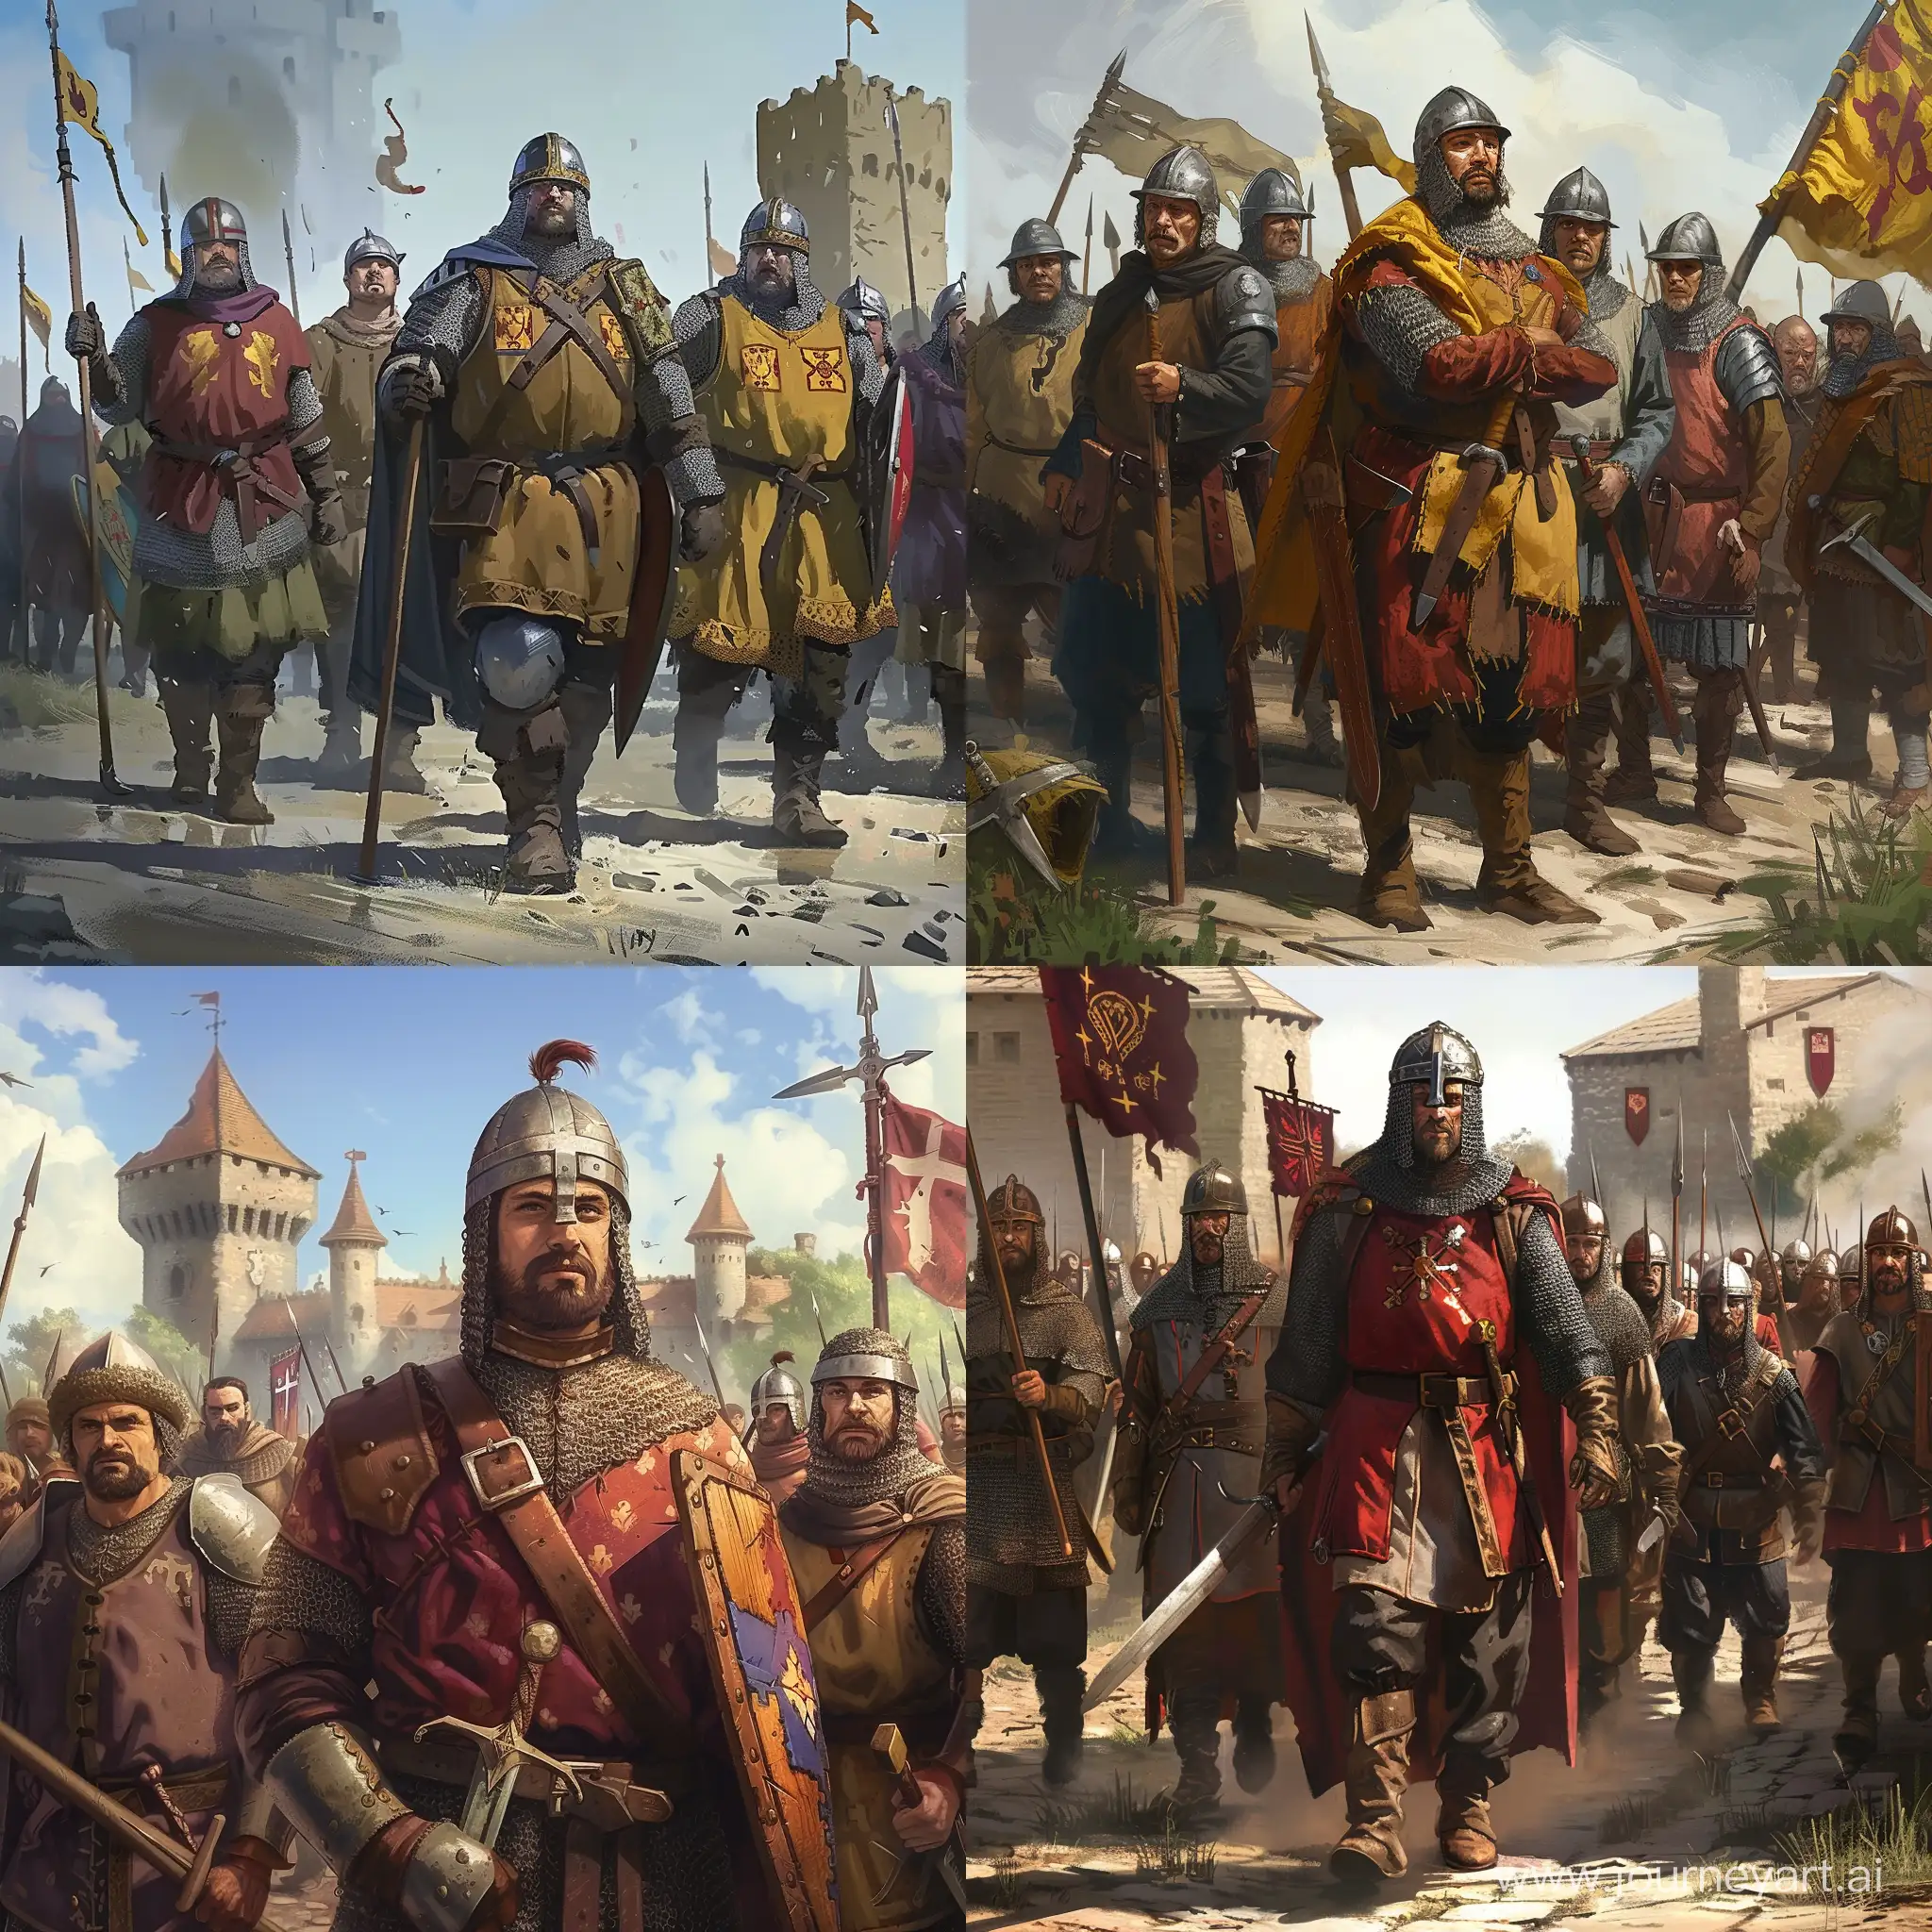 Medieval-Peasant-Militia-Gathering-in-the-Style-of-Crusader-Kings-3